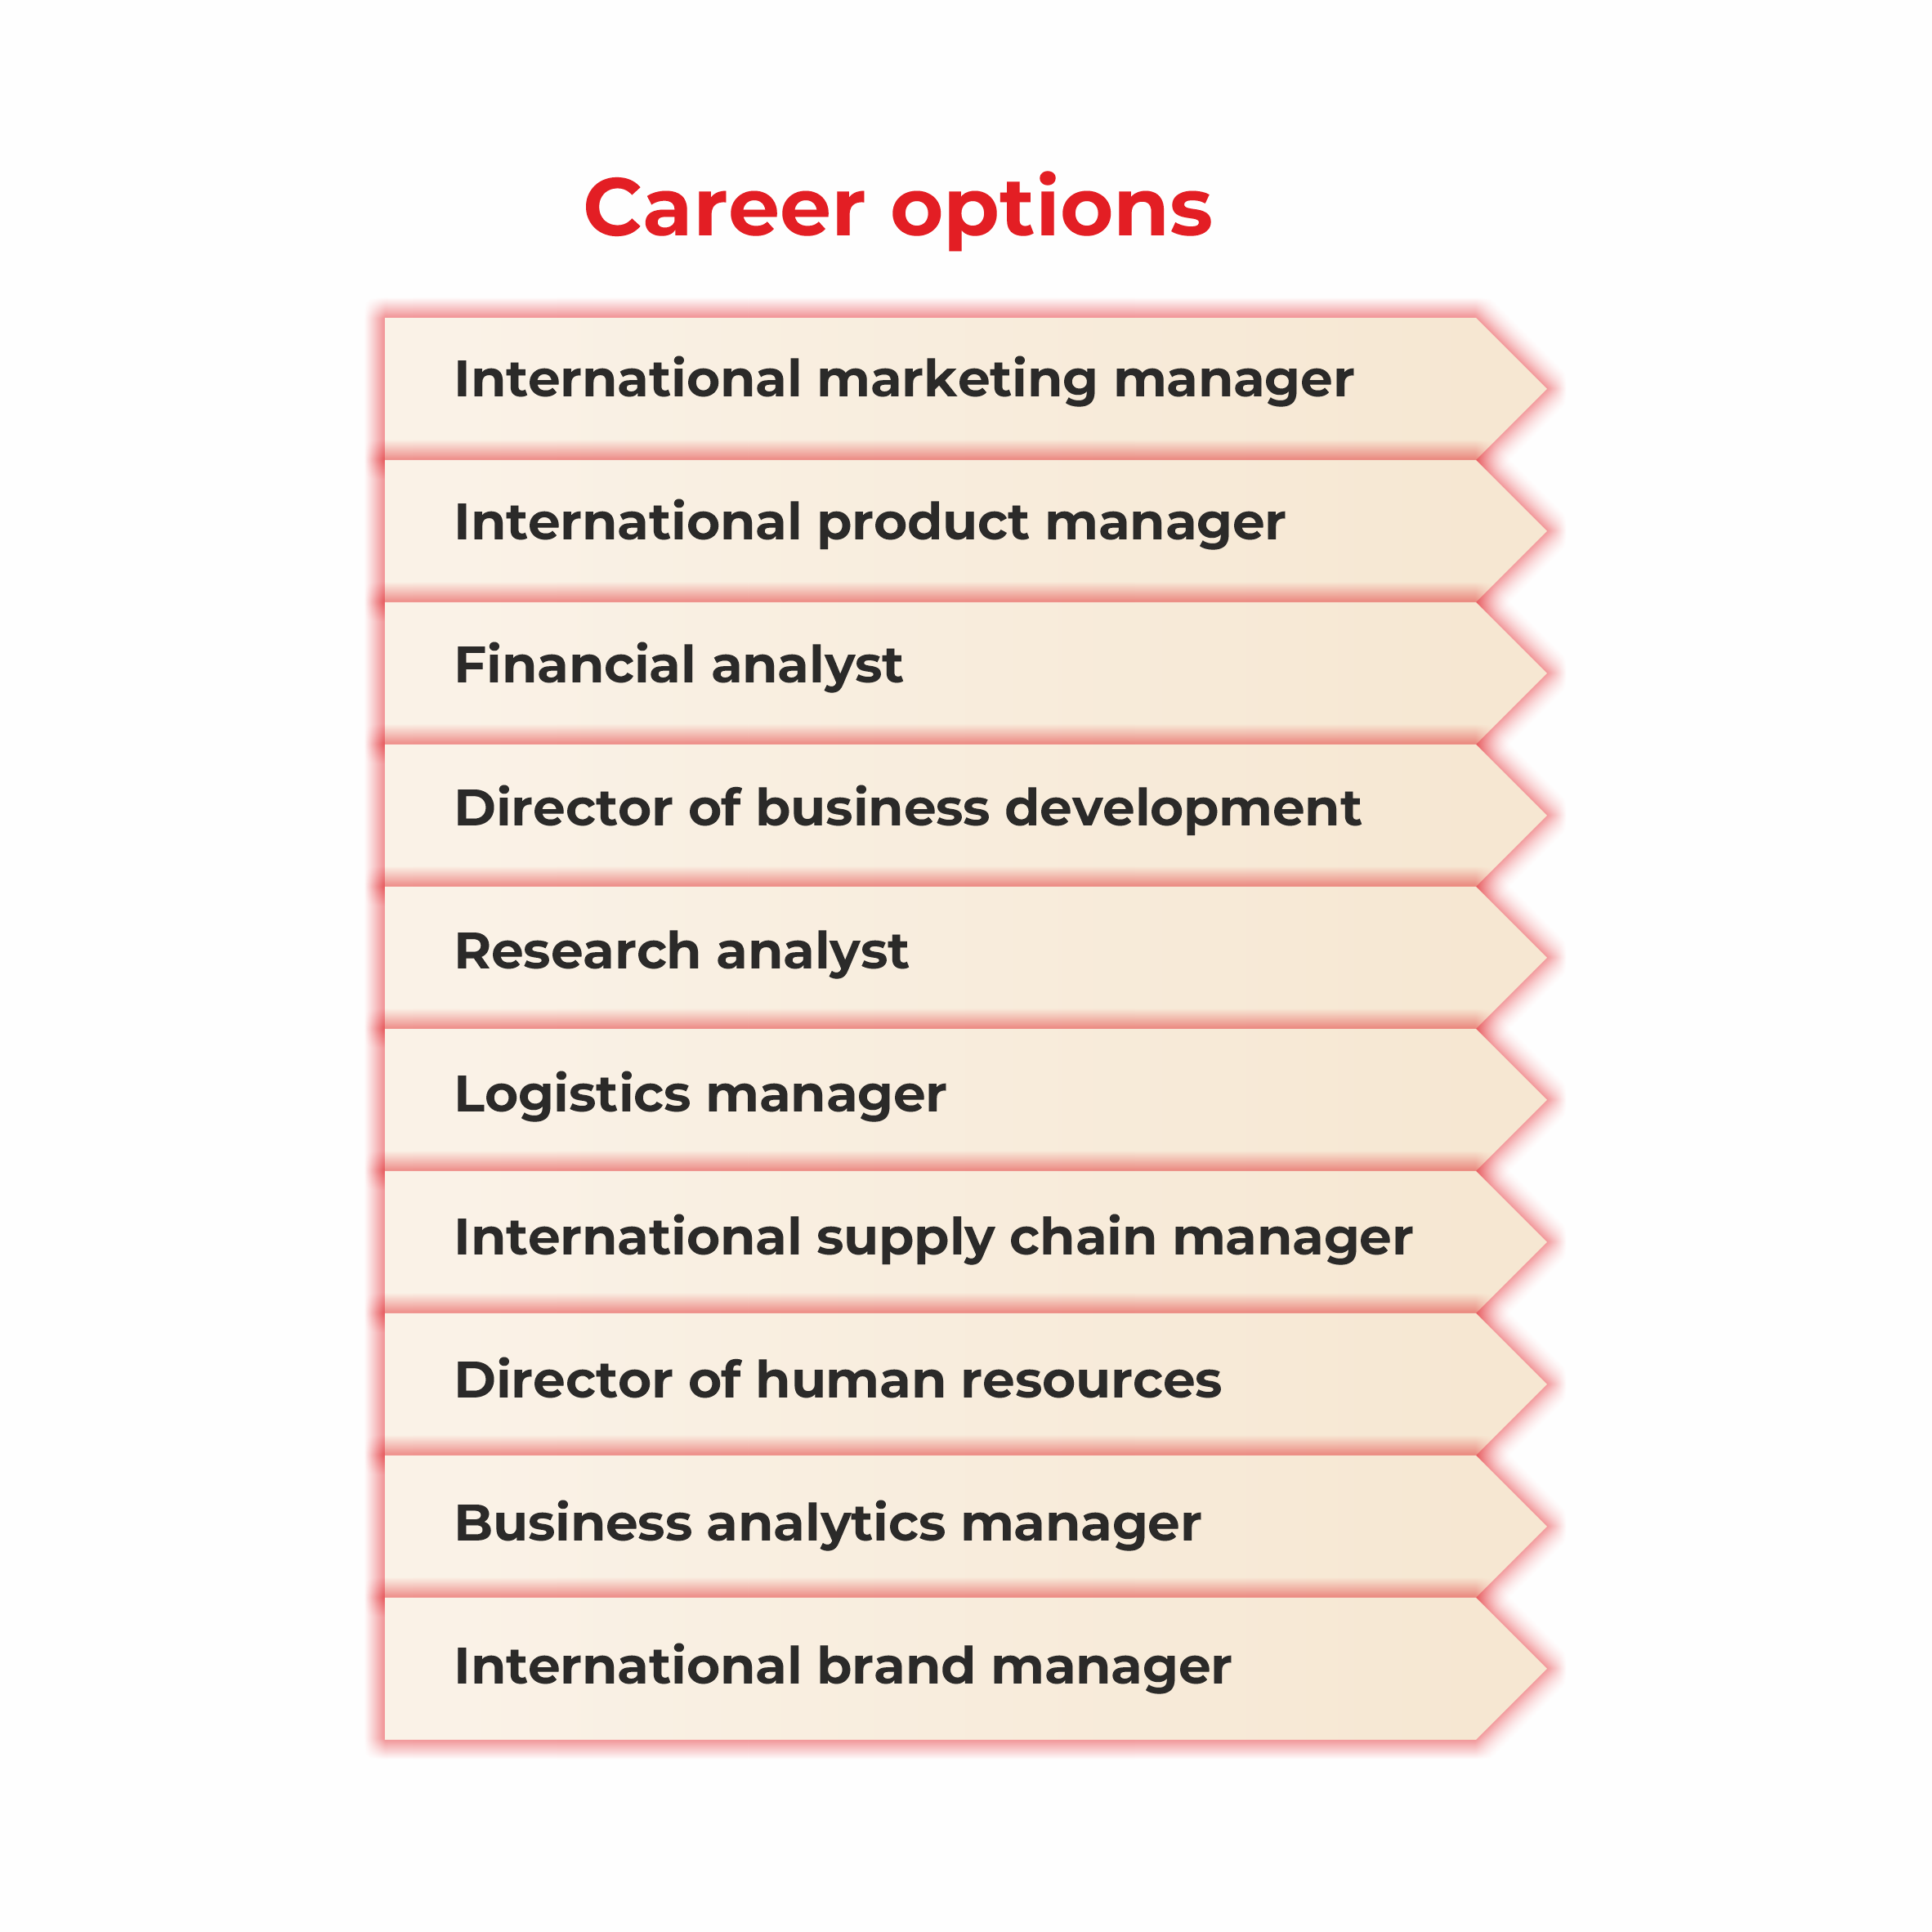 career options for international business